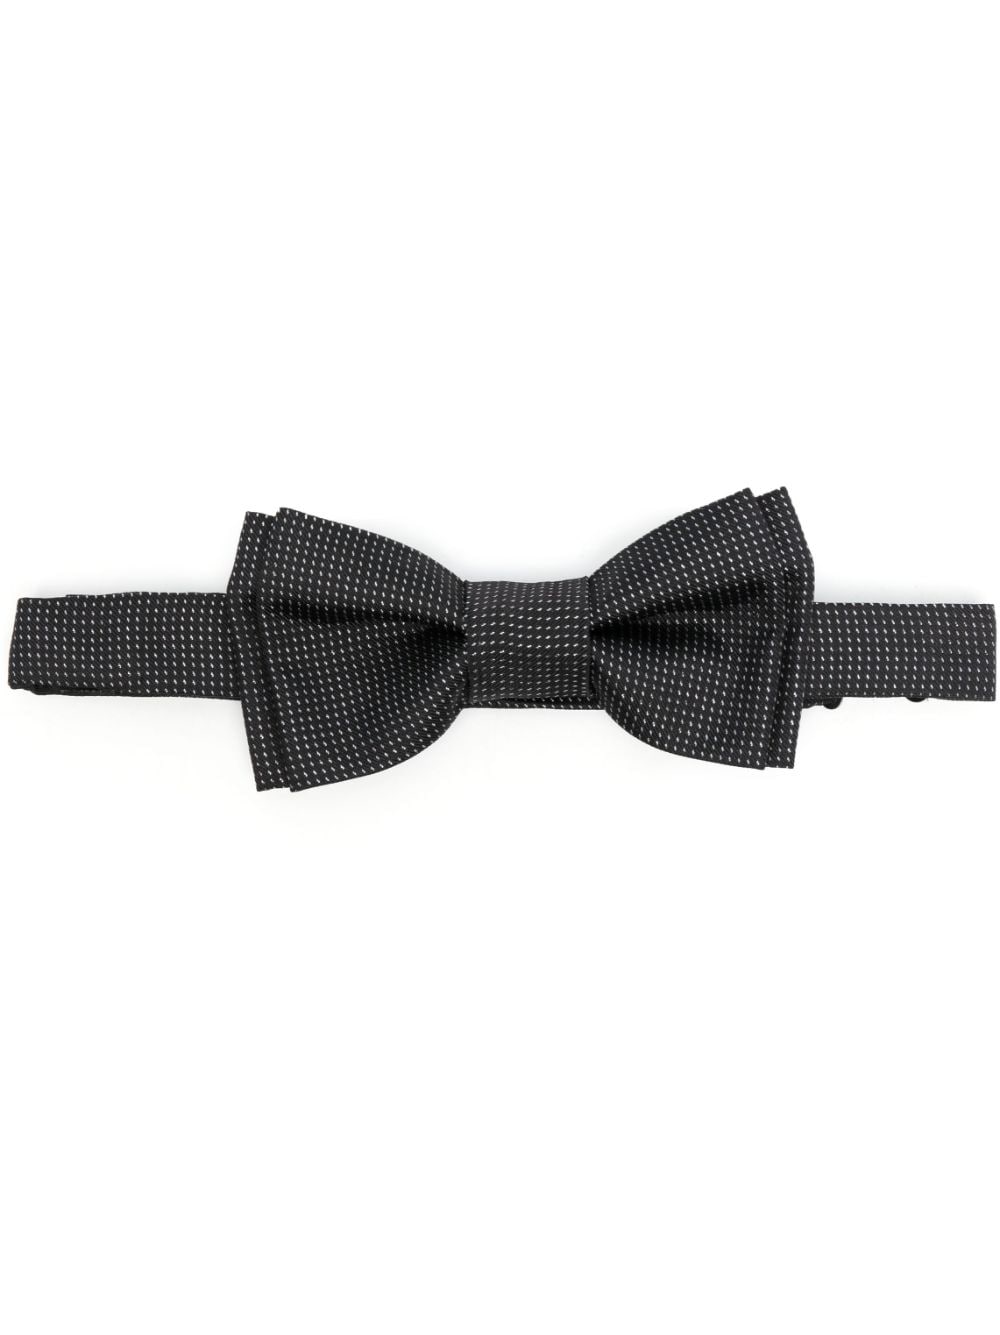 Paul Smith dot-print bow tie - Black von Paul Smith